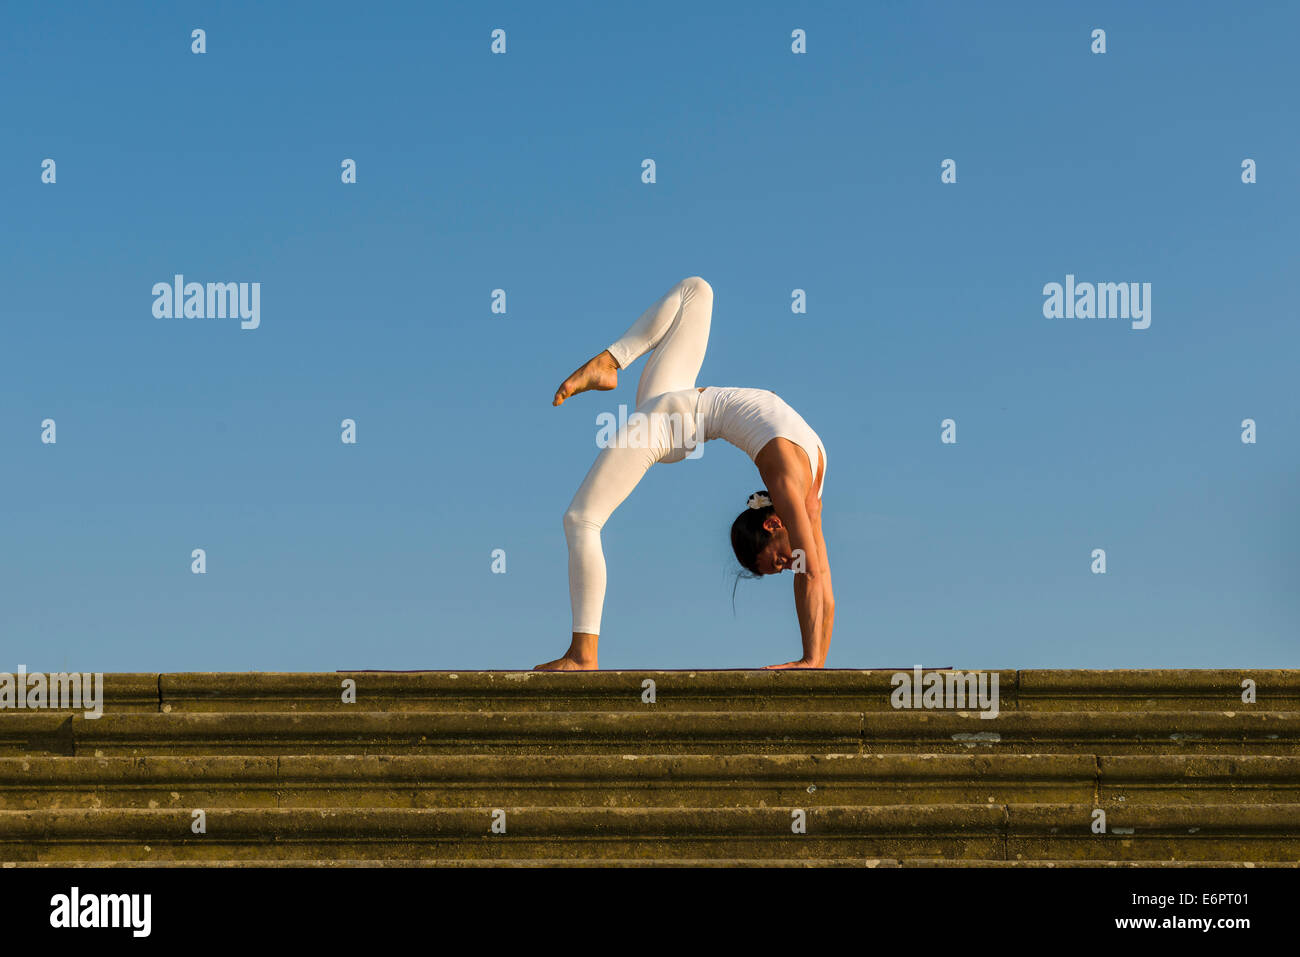 Junge Frau Hatha Yoga im Freien praktizieren, zeigt die Pose Chakrasana, Urdhva Dhanurasana, Rad-Pose Stockfoto